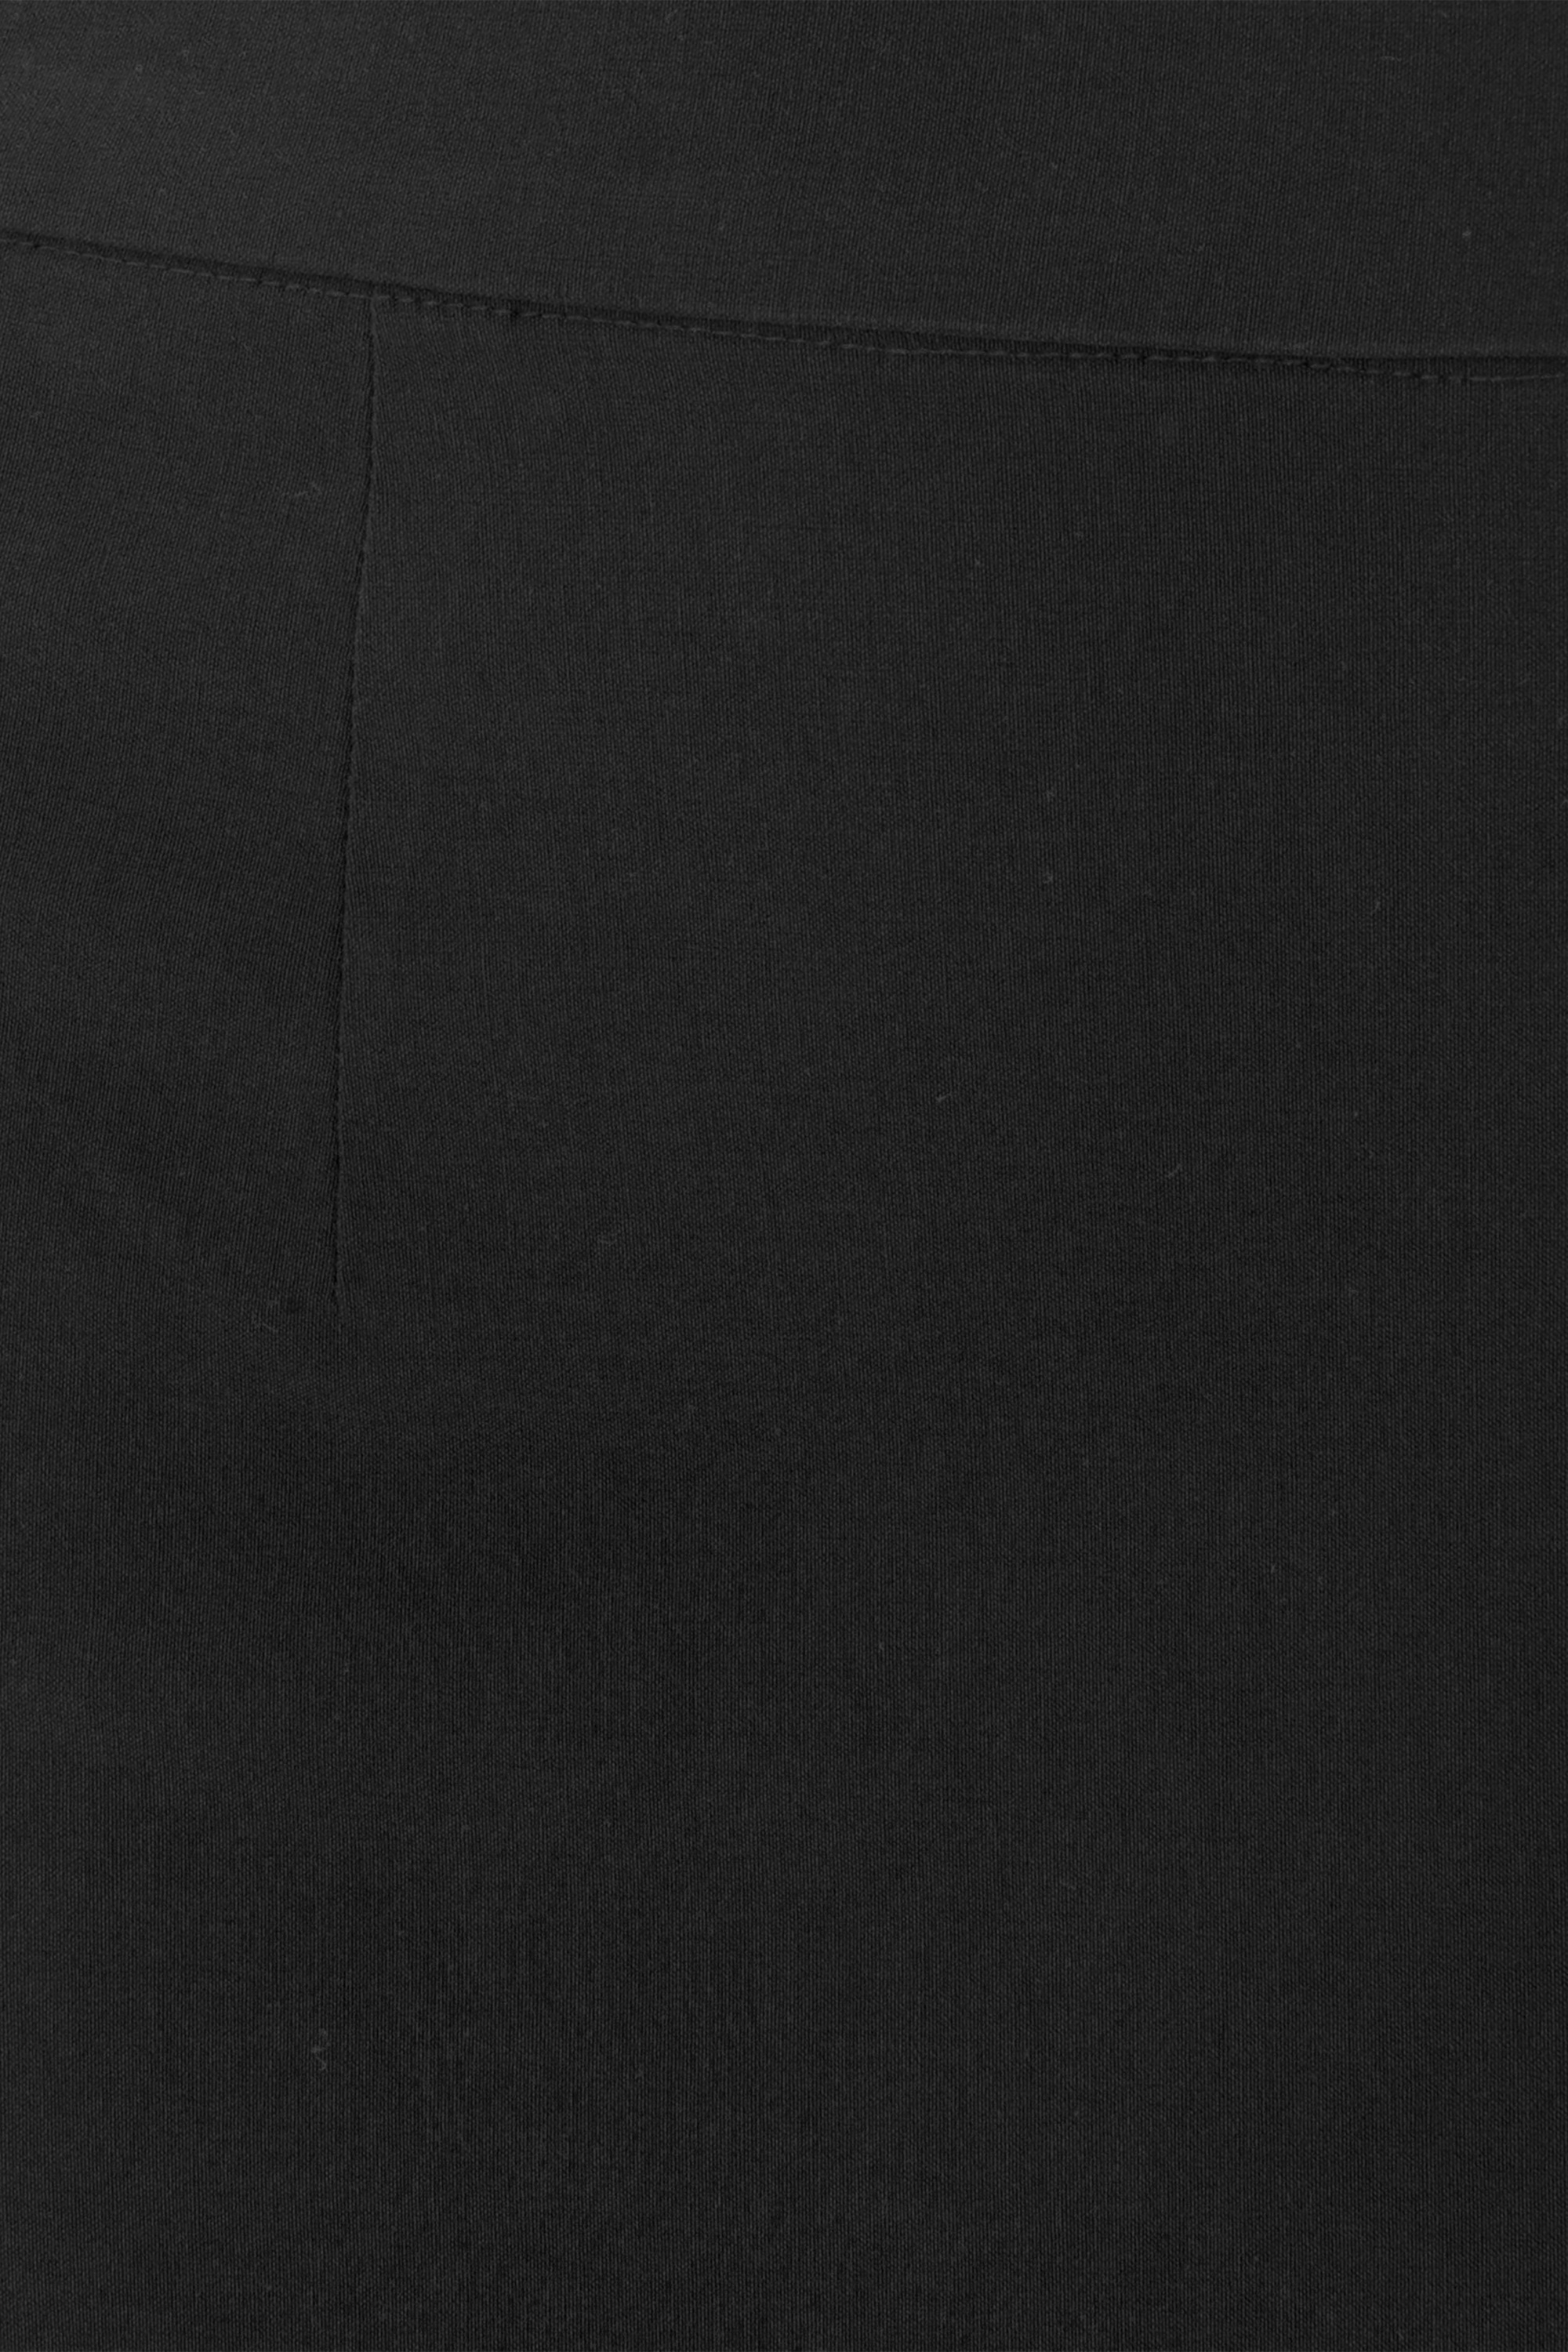 Collectif Clothing - Polly Bengaline rok in zwart 5